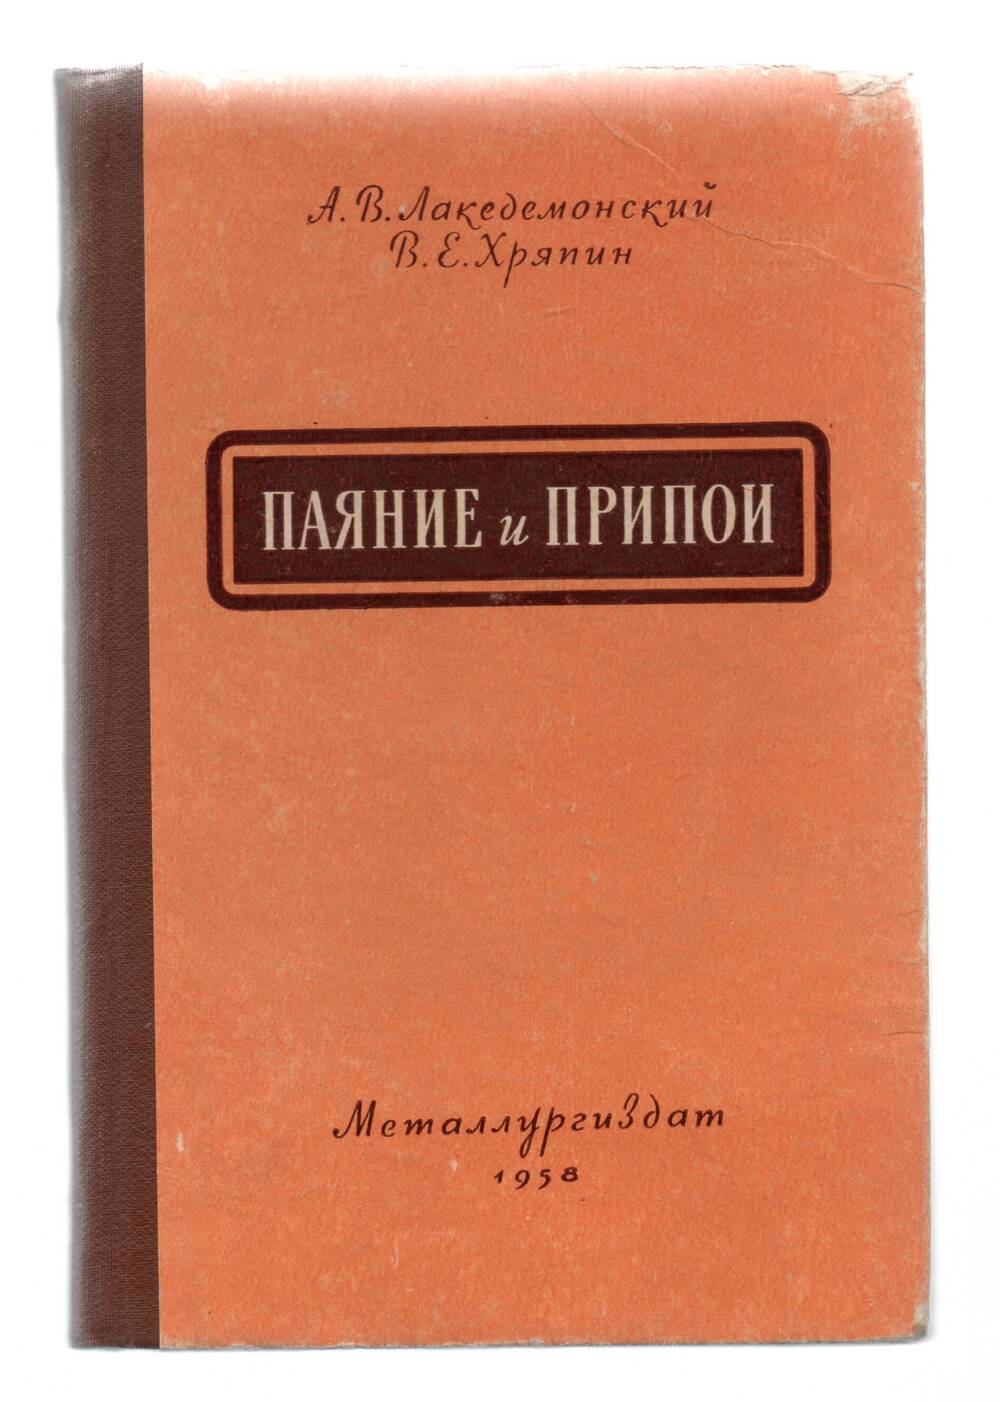 Книга А. В. Лакедемонский, В.Е. Хряпин  «Паяние и припой»  М. 1958г.